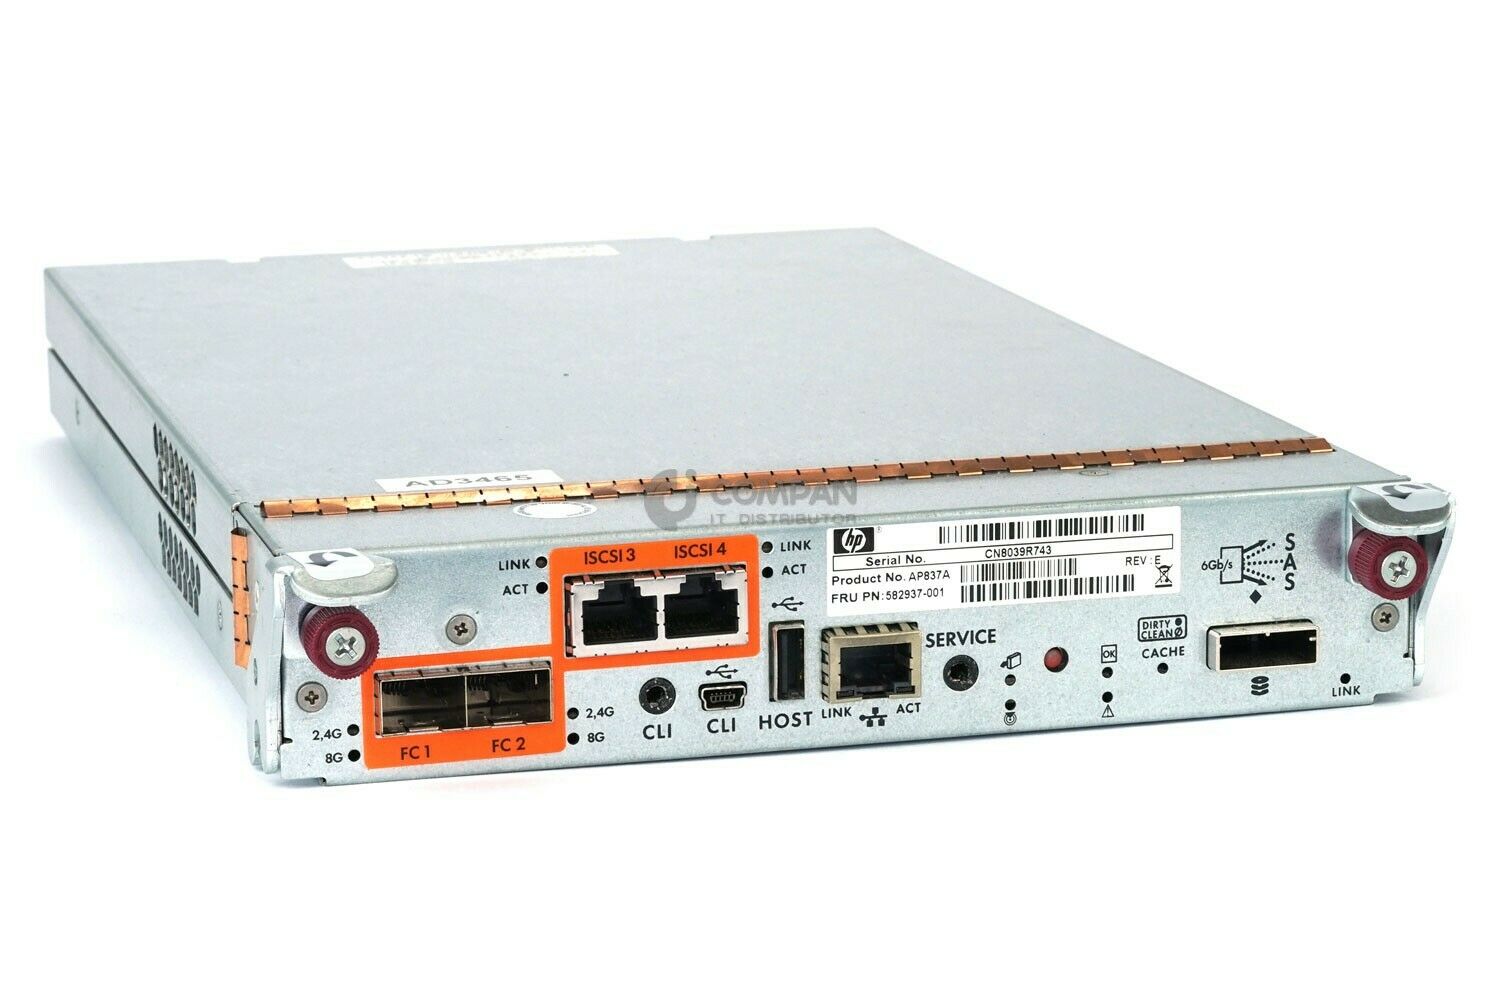 582937-001 Hp 8gb Fc Iscsi Storage Controller For Storageworks P2000 G3 Msa